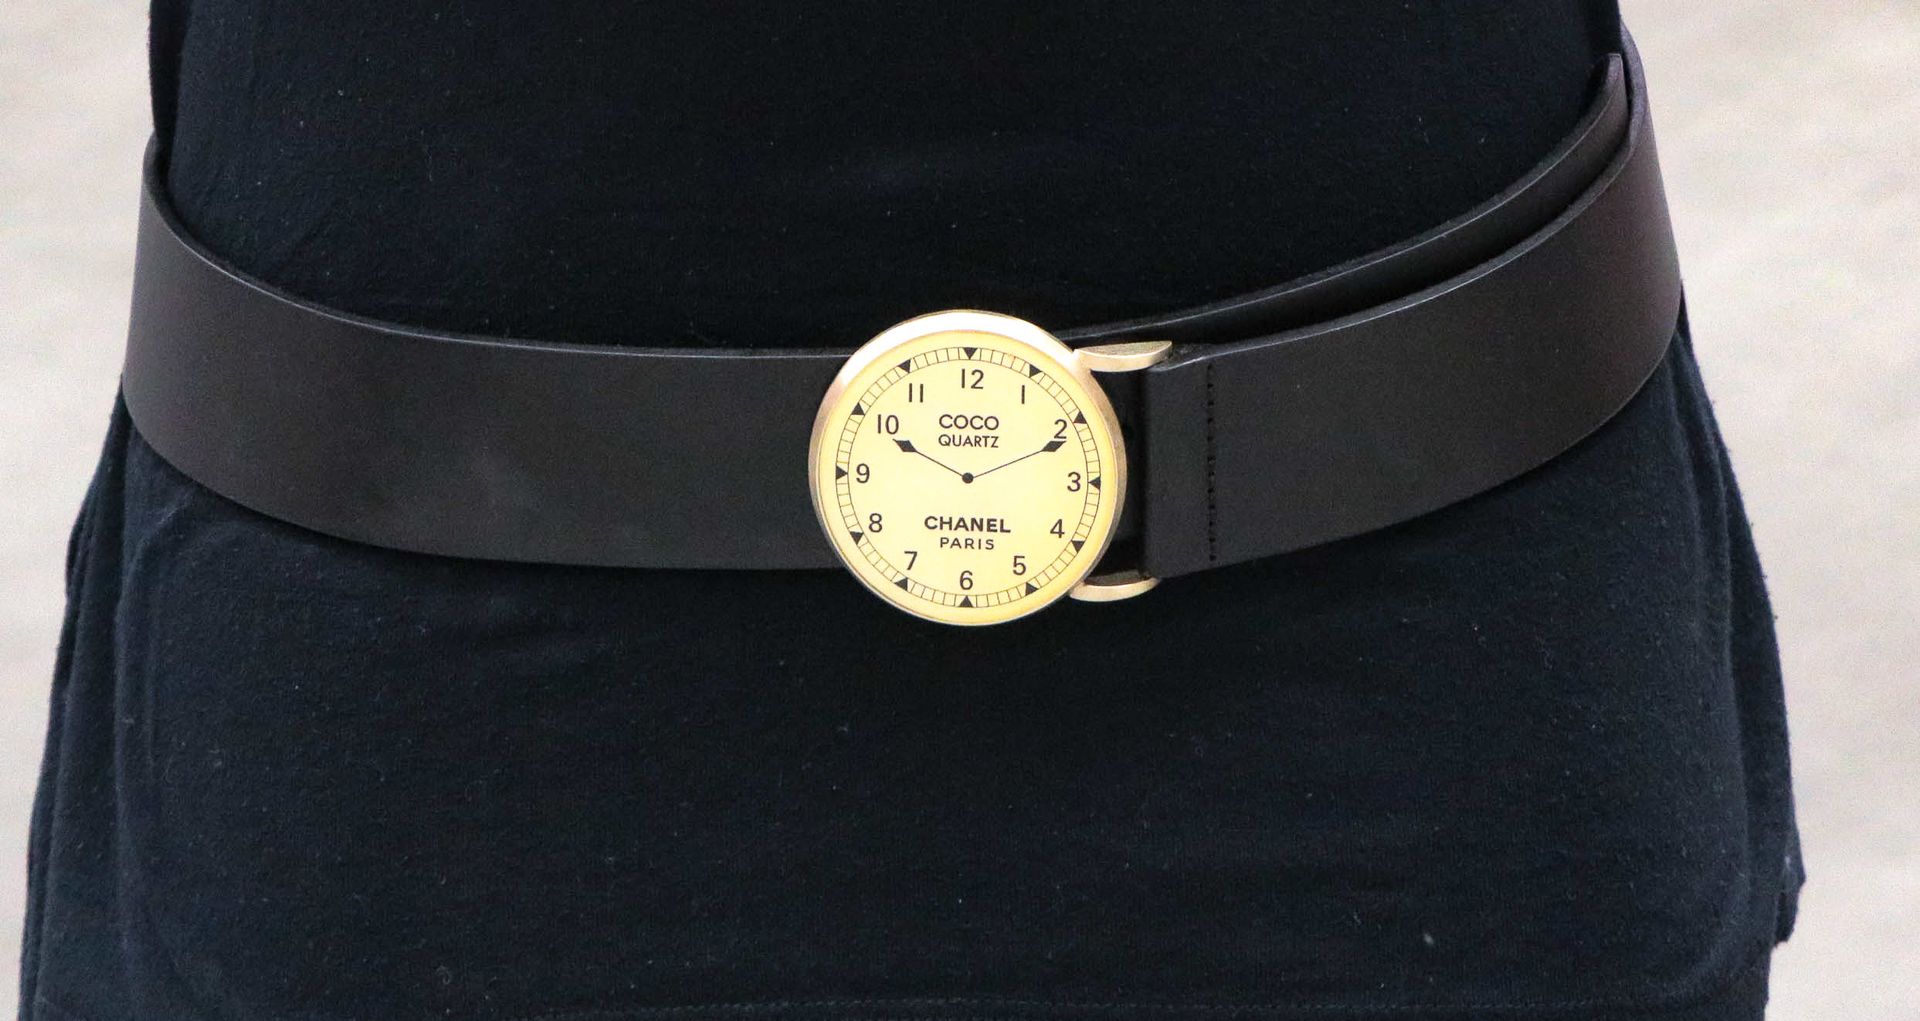 Null 香奈儿 - 约在2007年 - 黑色真皮腰带 - 镀金金属扣，中间有一个手表面或蛋壳钟图案 - 尺寸90/36